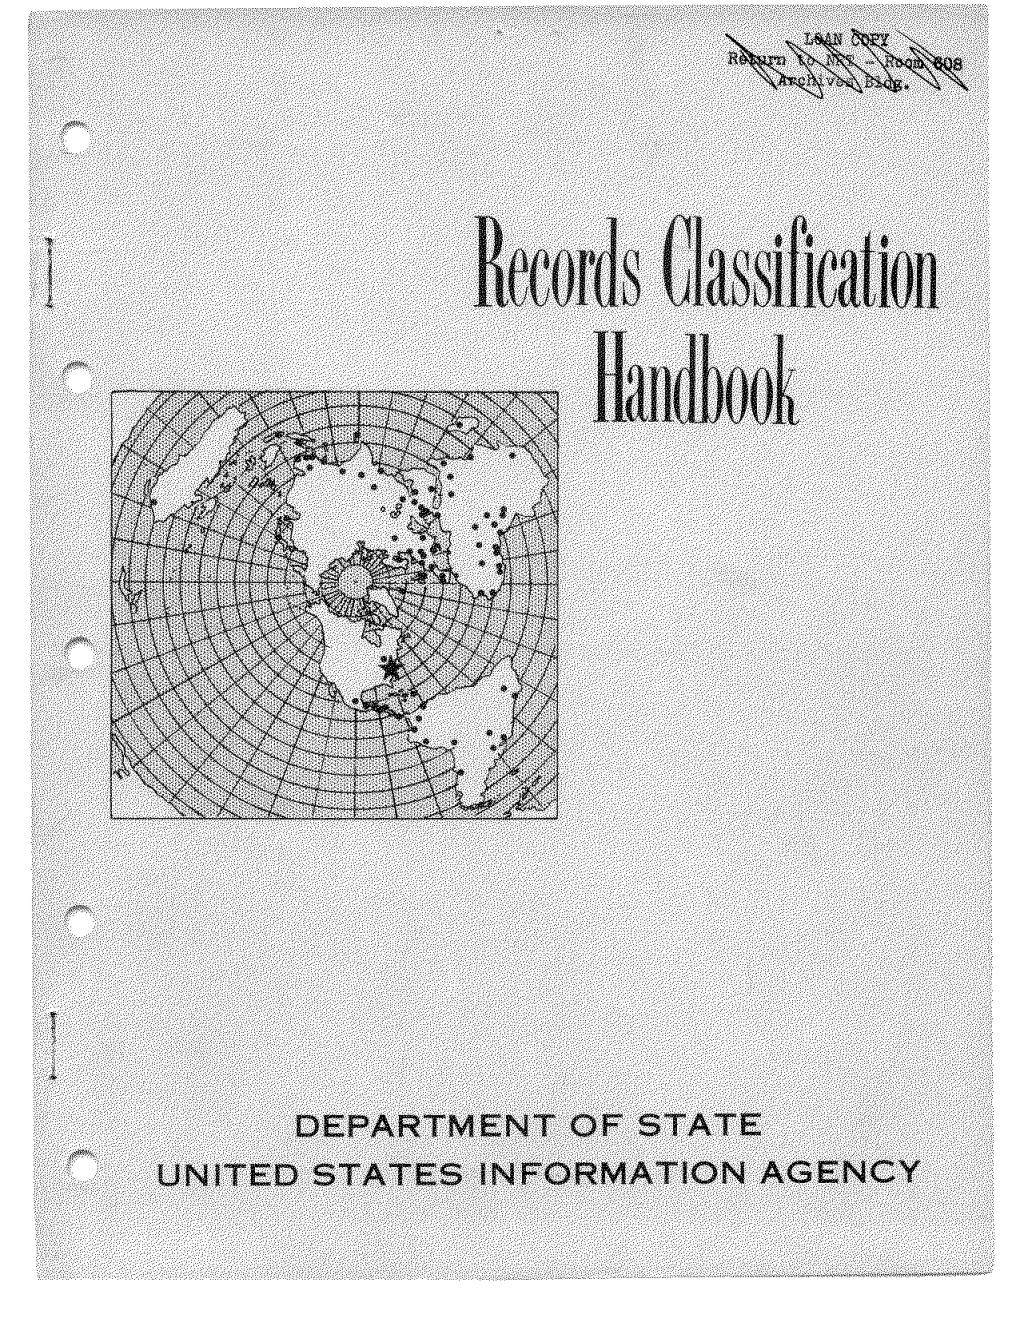 1965 Classification Handbook